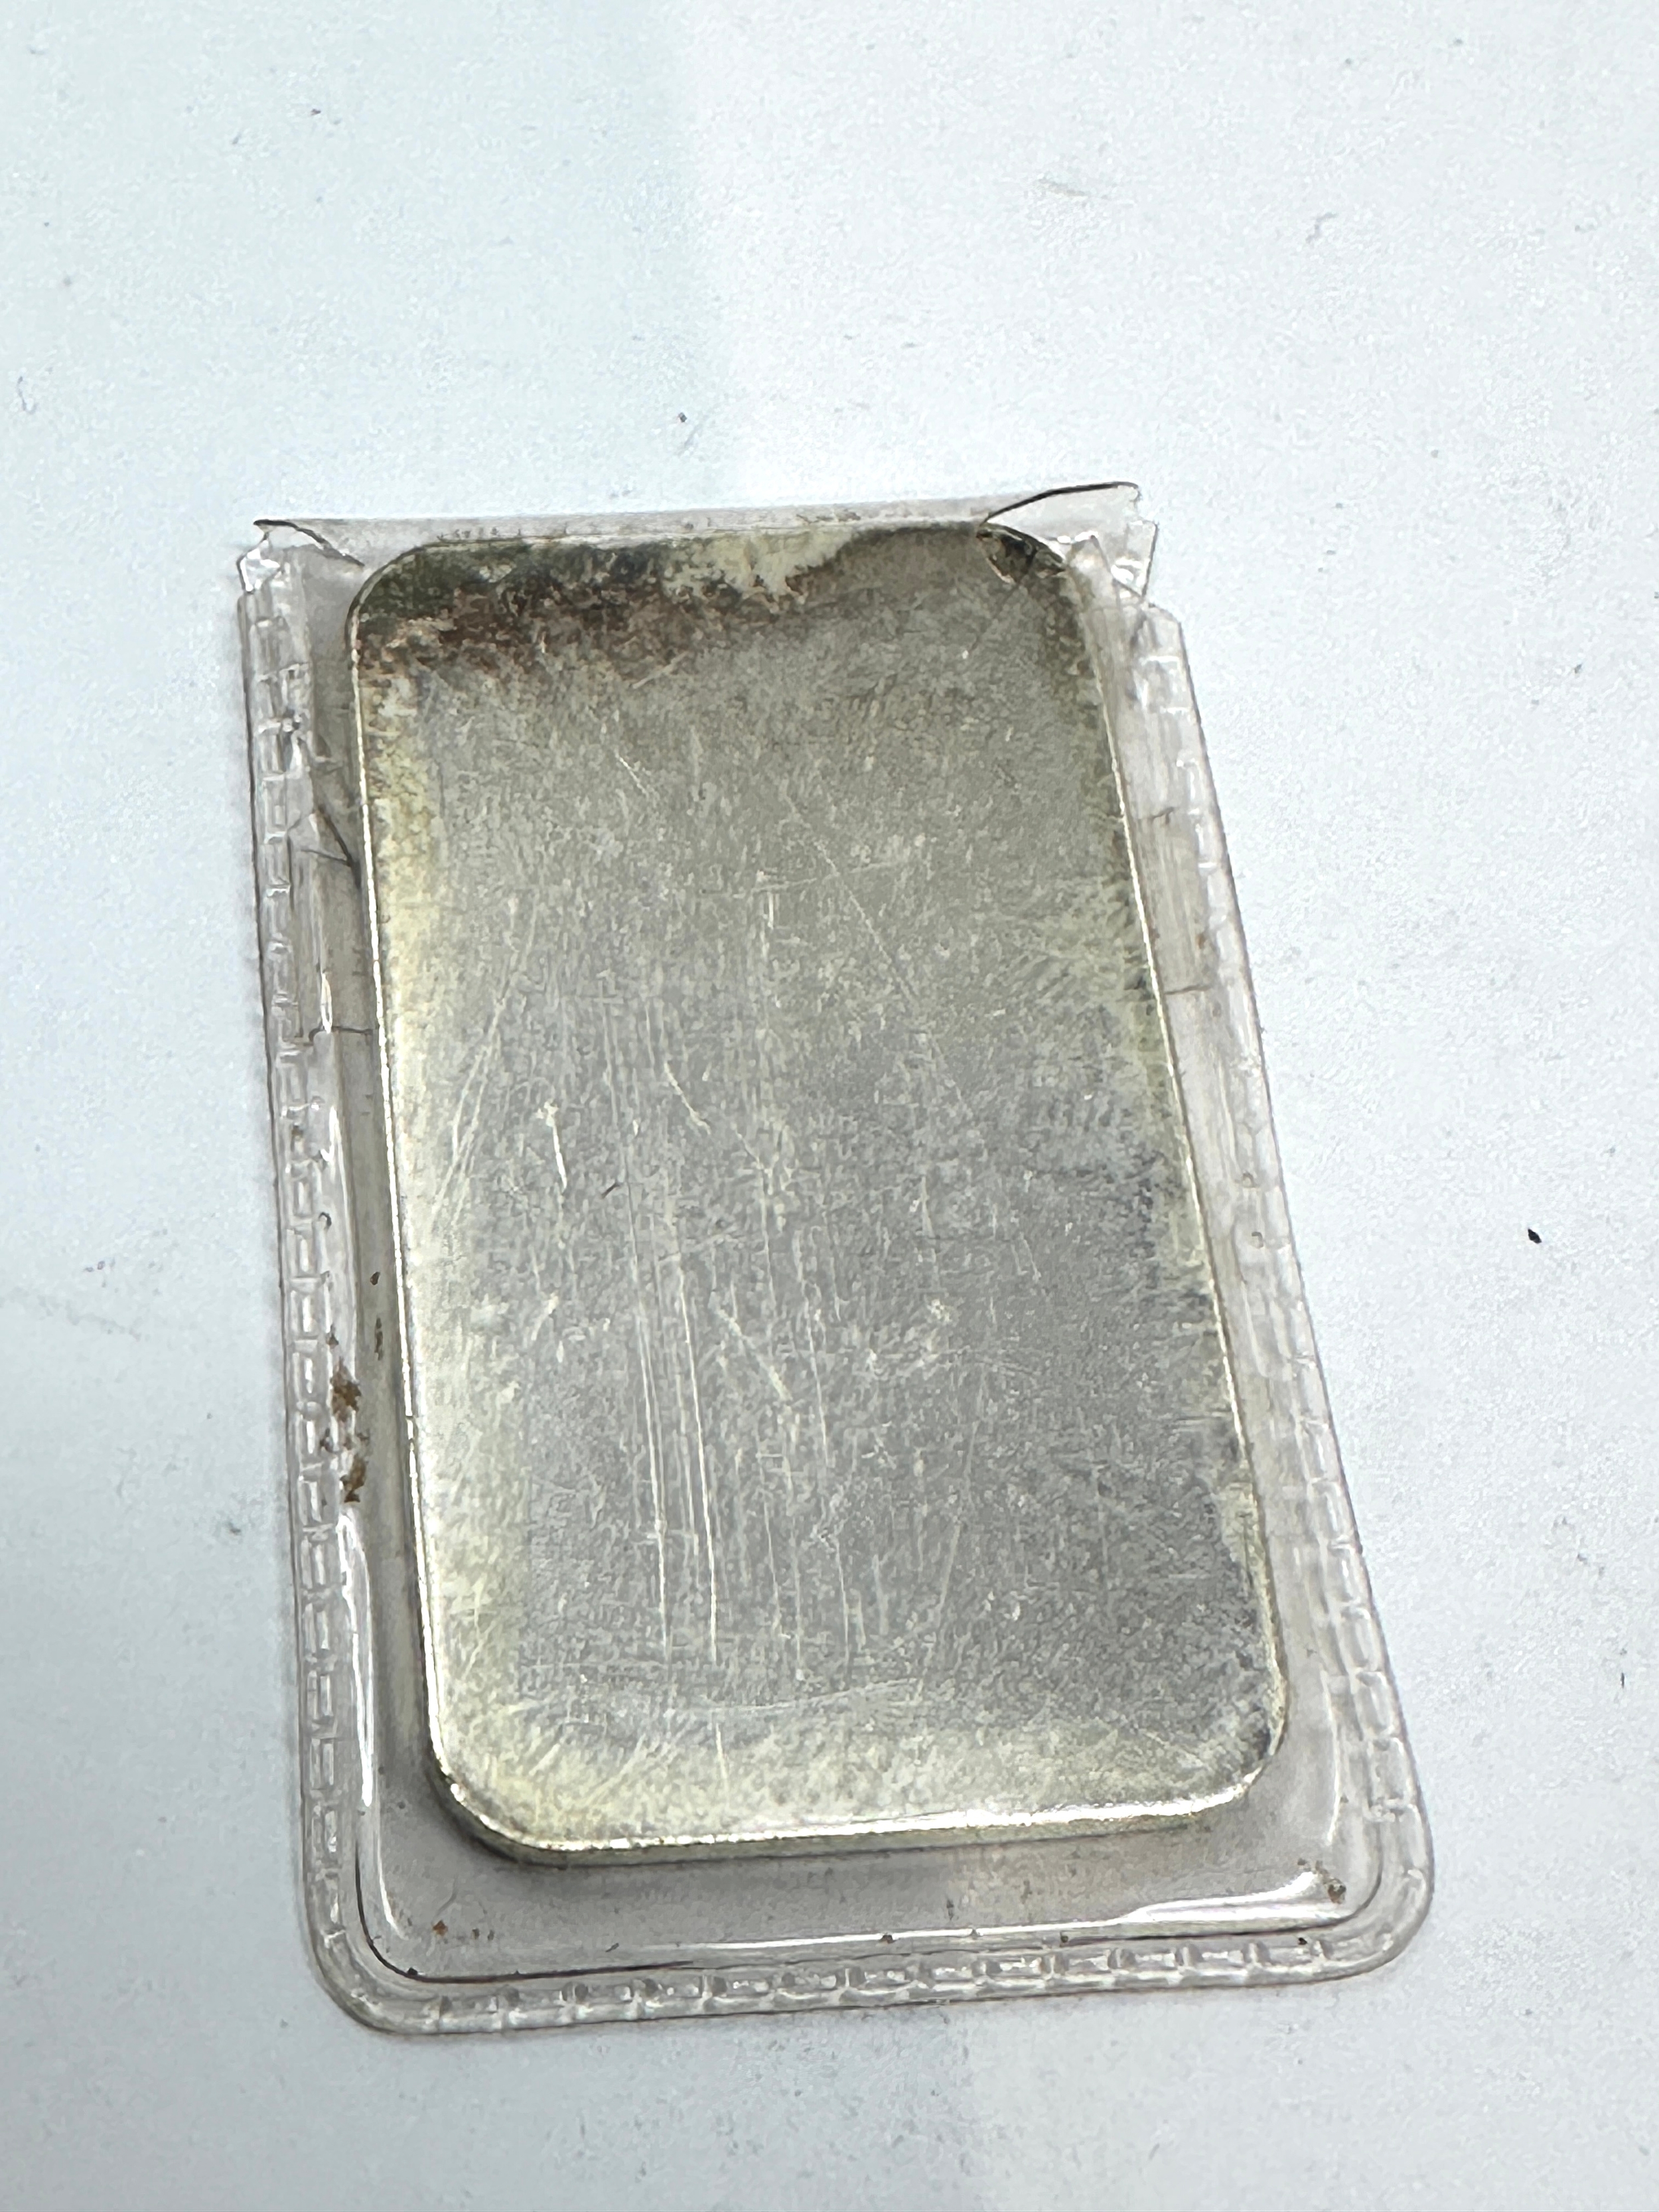 sharps pixley & Co one ounce fine 999.0 silver ingot bar - Image 2 of 2